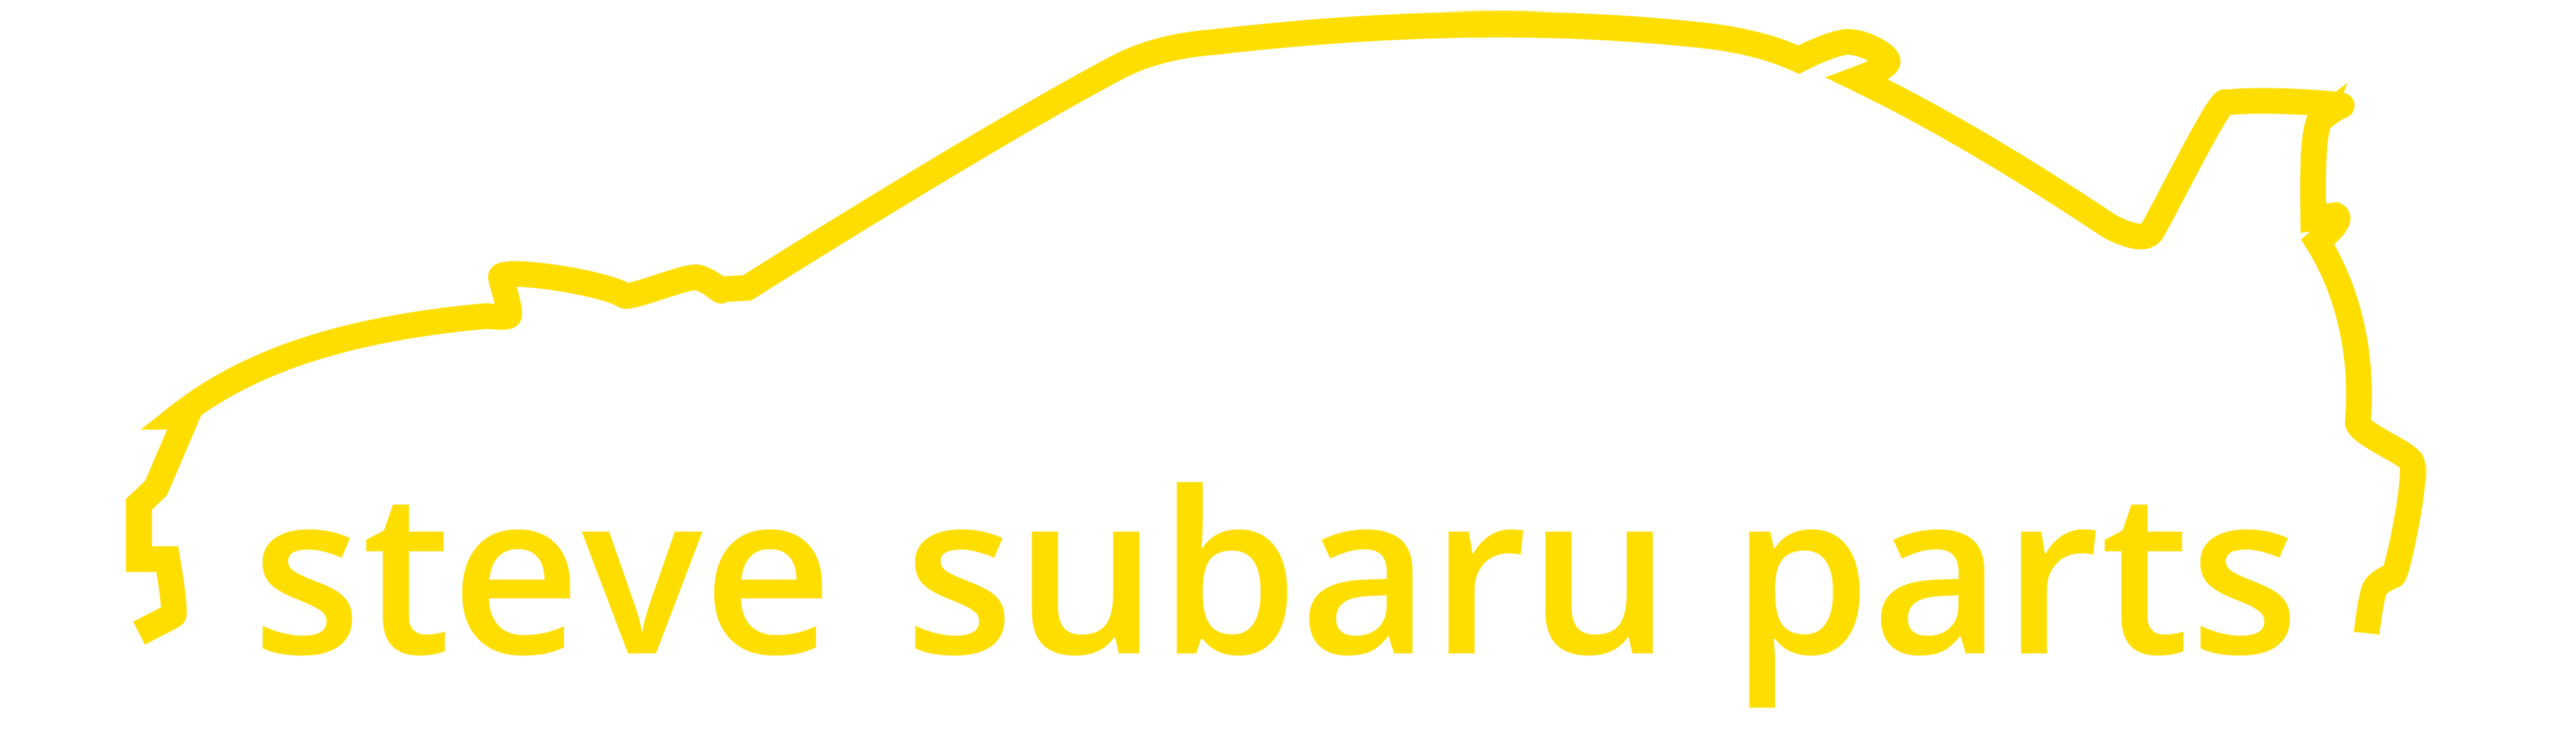 Subaru Impreza Logo - Genuine Used Subaru Impreza Parts | Car Parts | Steve Subaru Parts